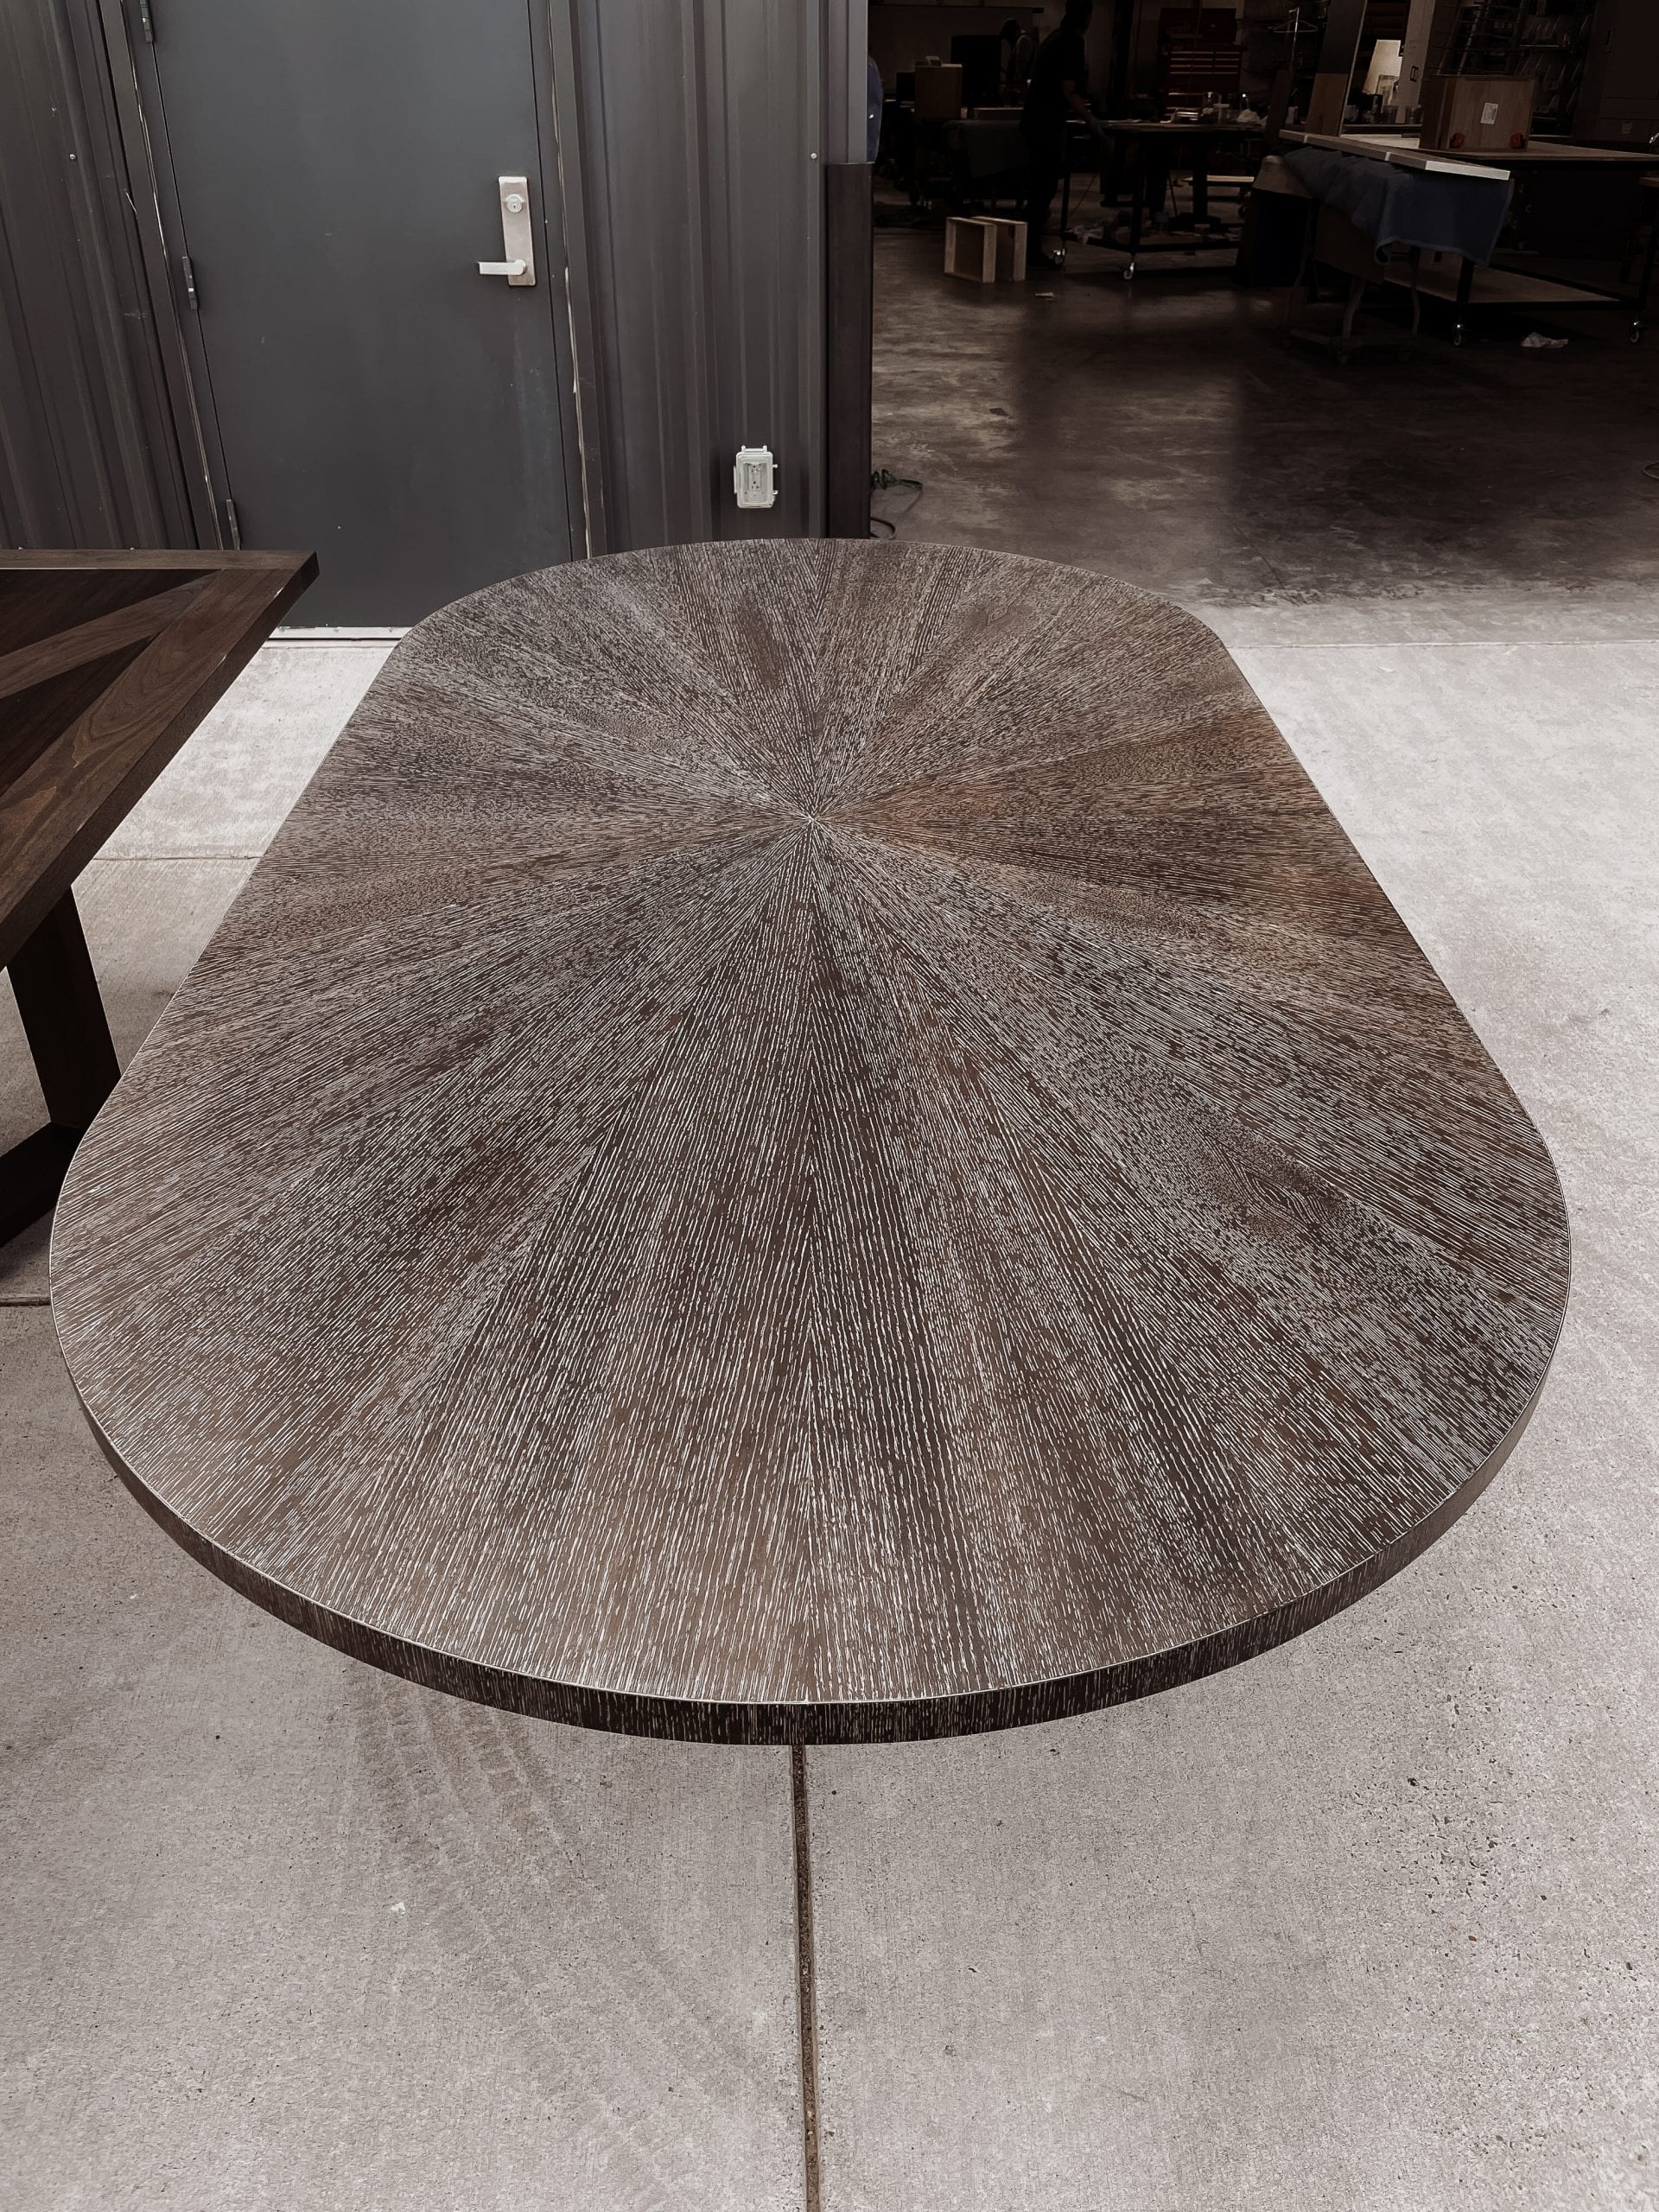 Wood Grain of Oval Radiate Table